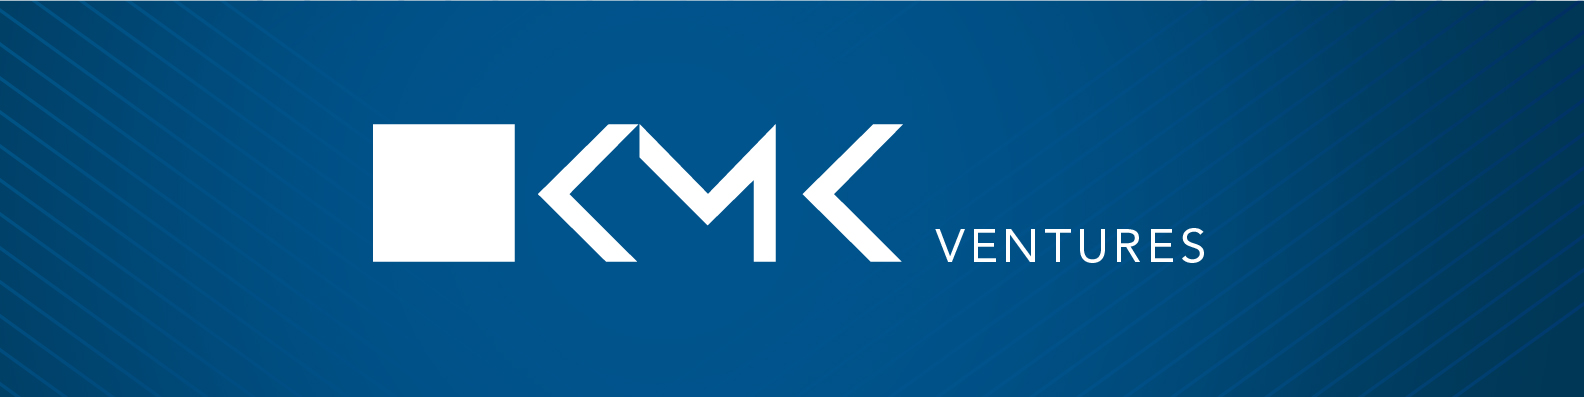 KMK Ventures Cover Image